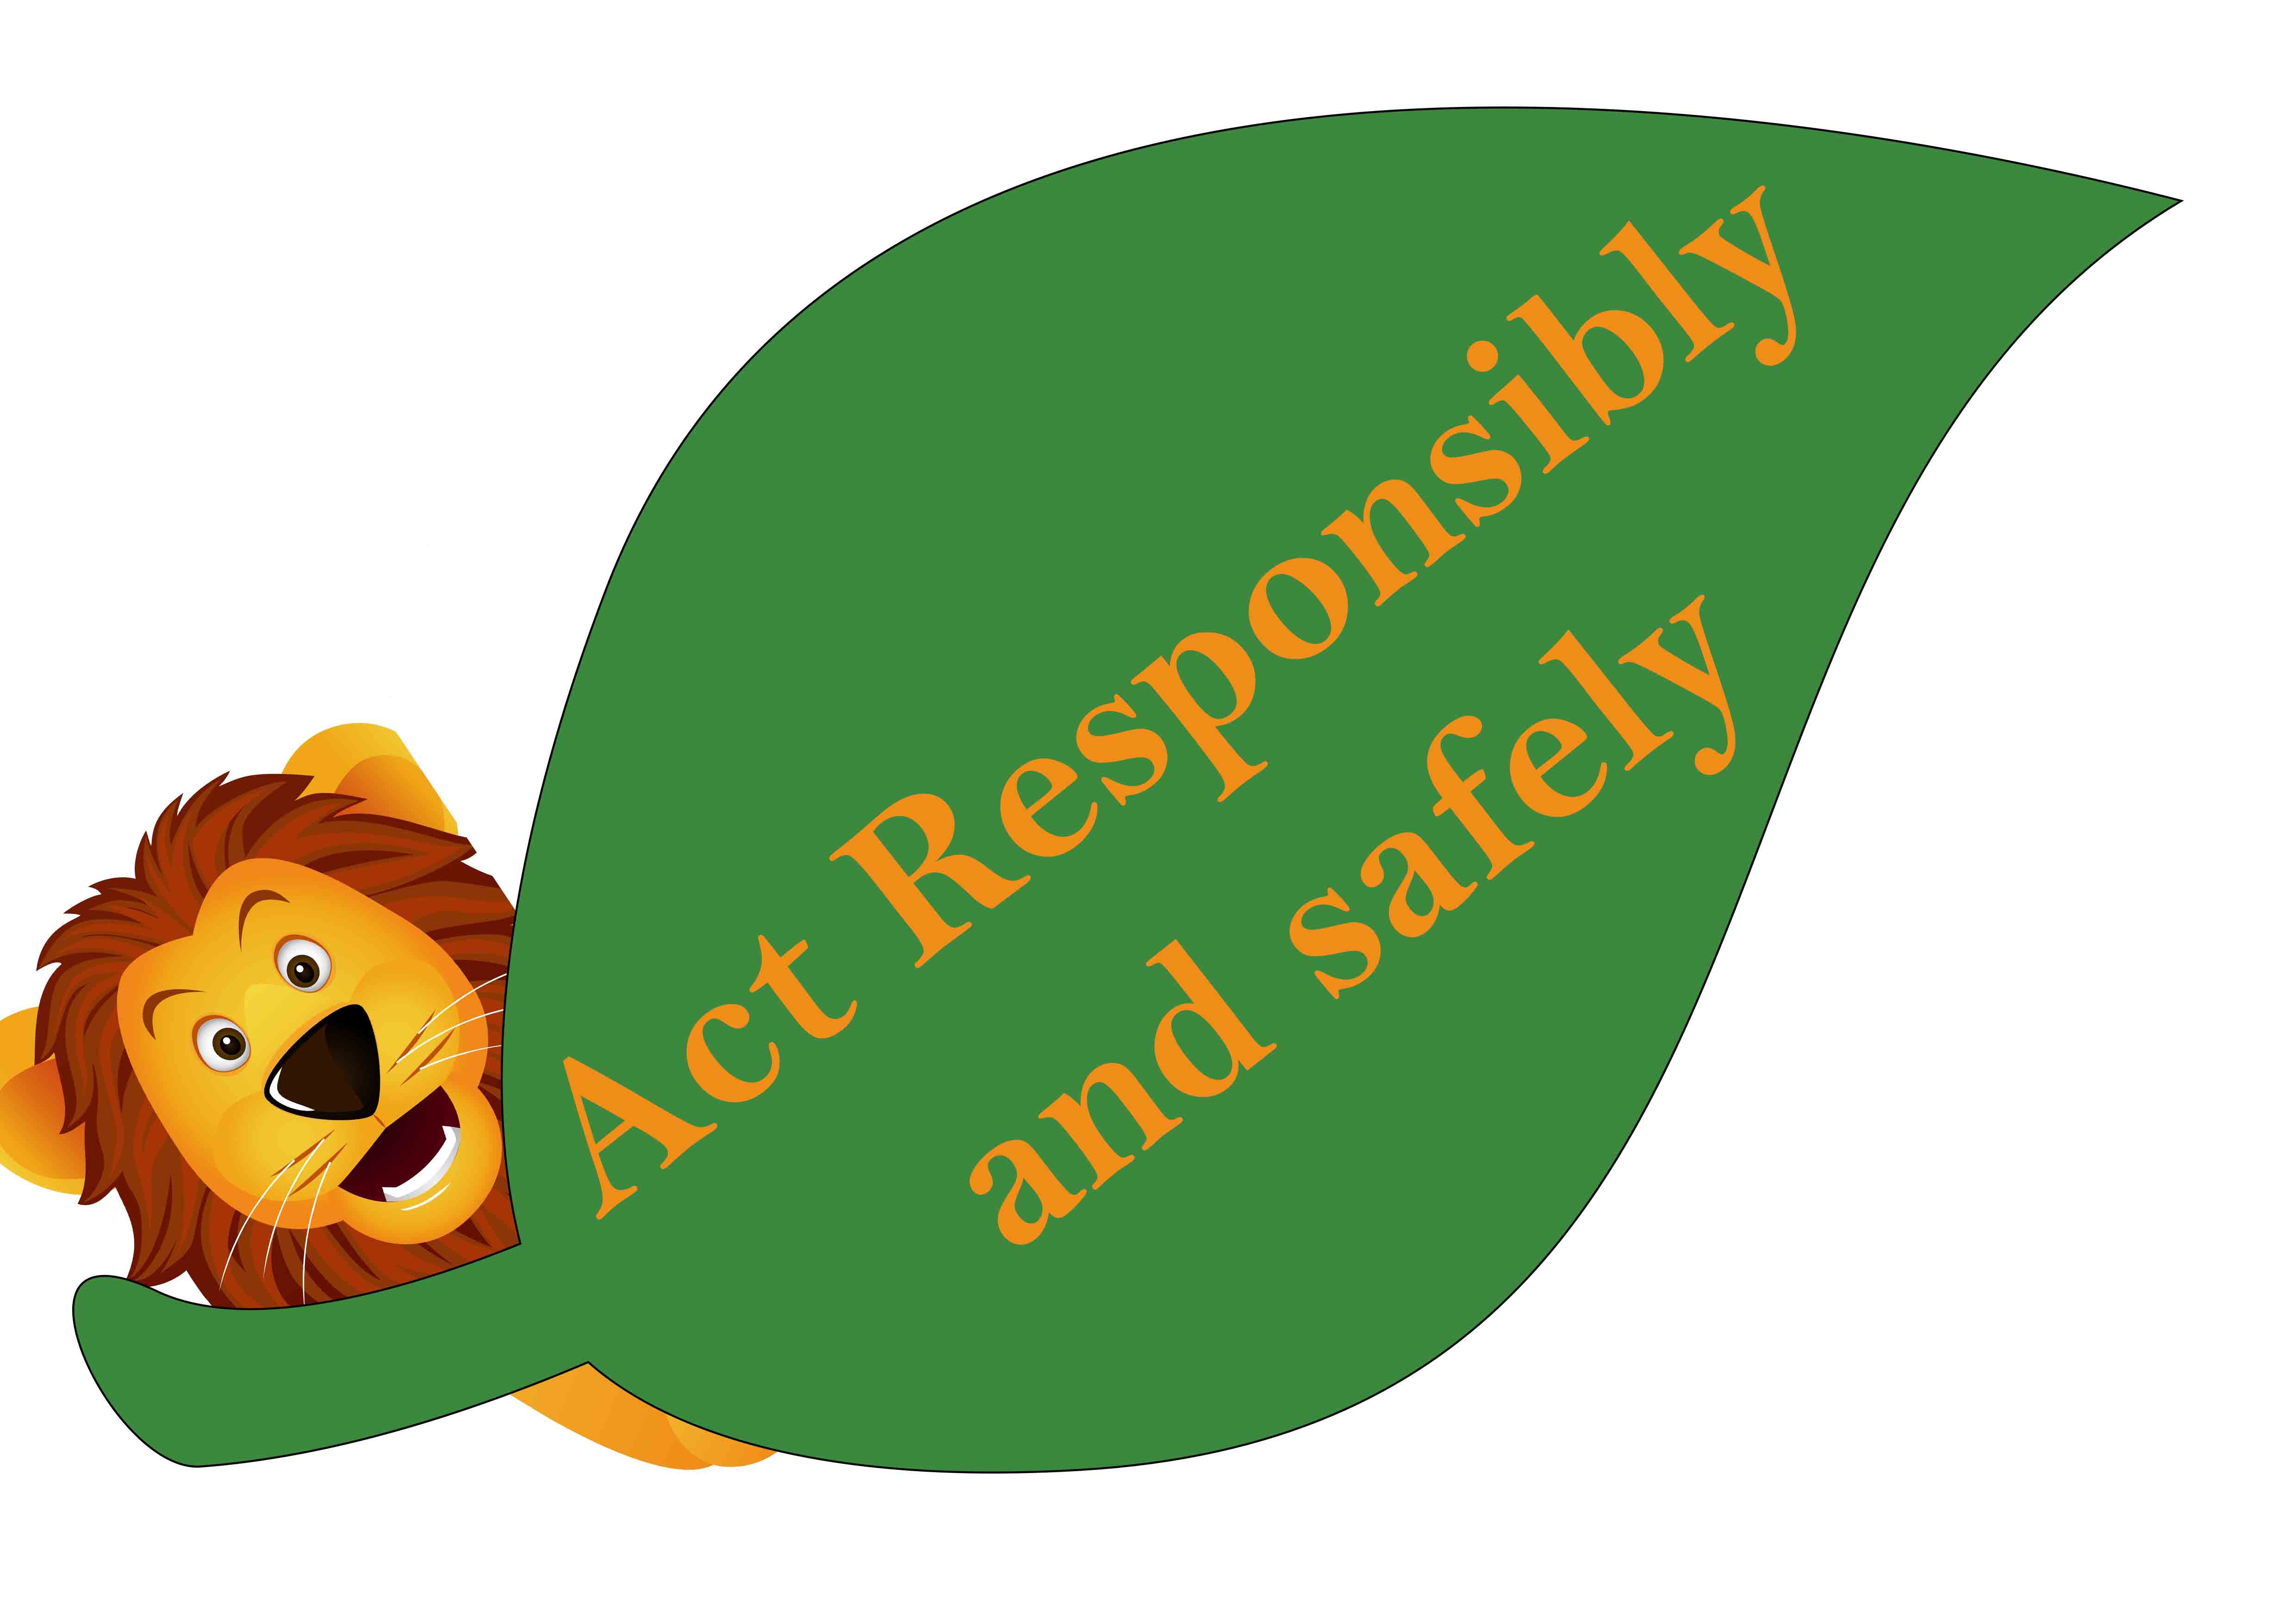 responsibility poster.jpg